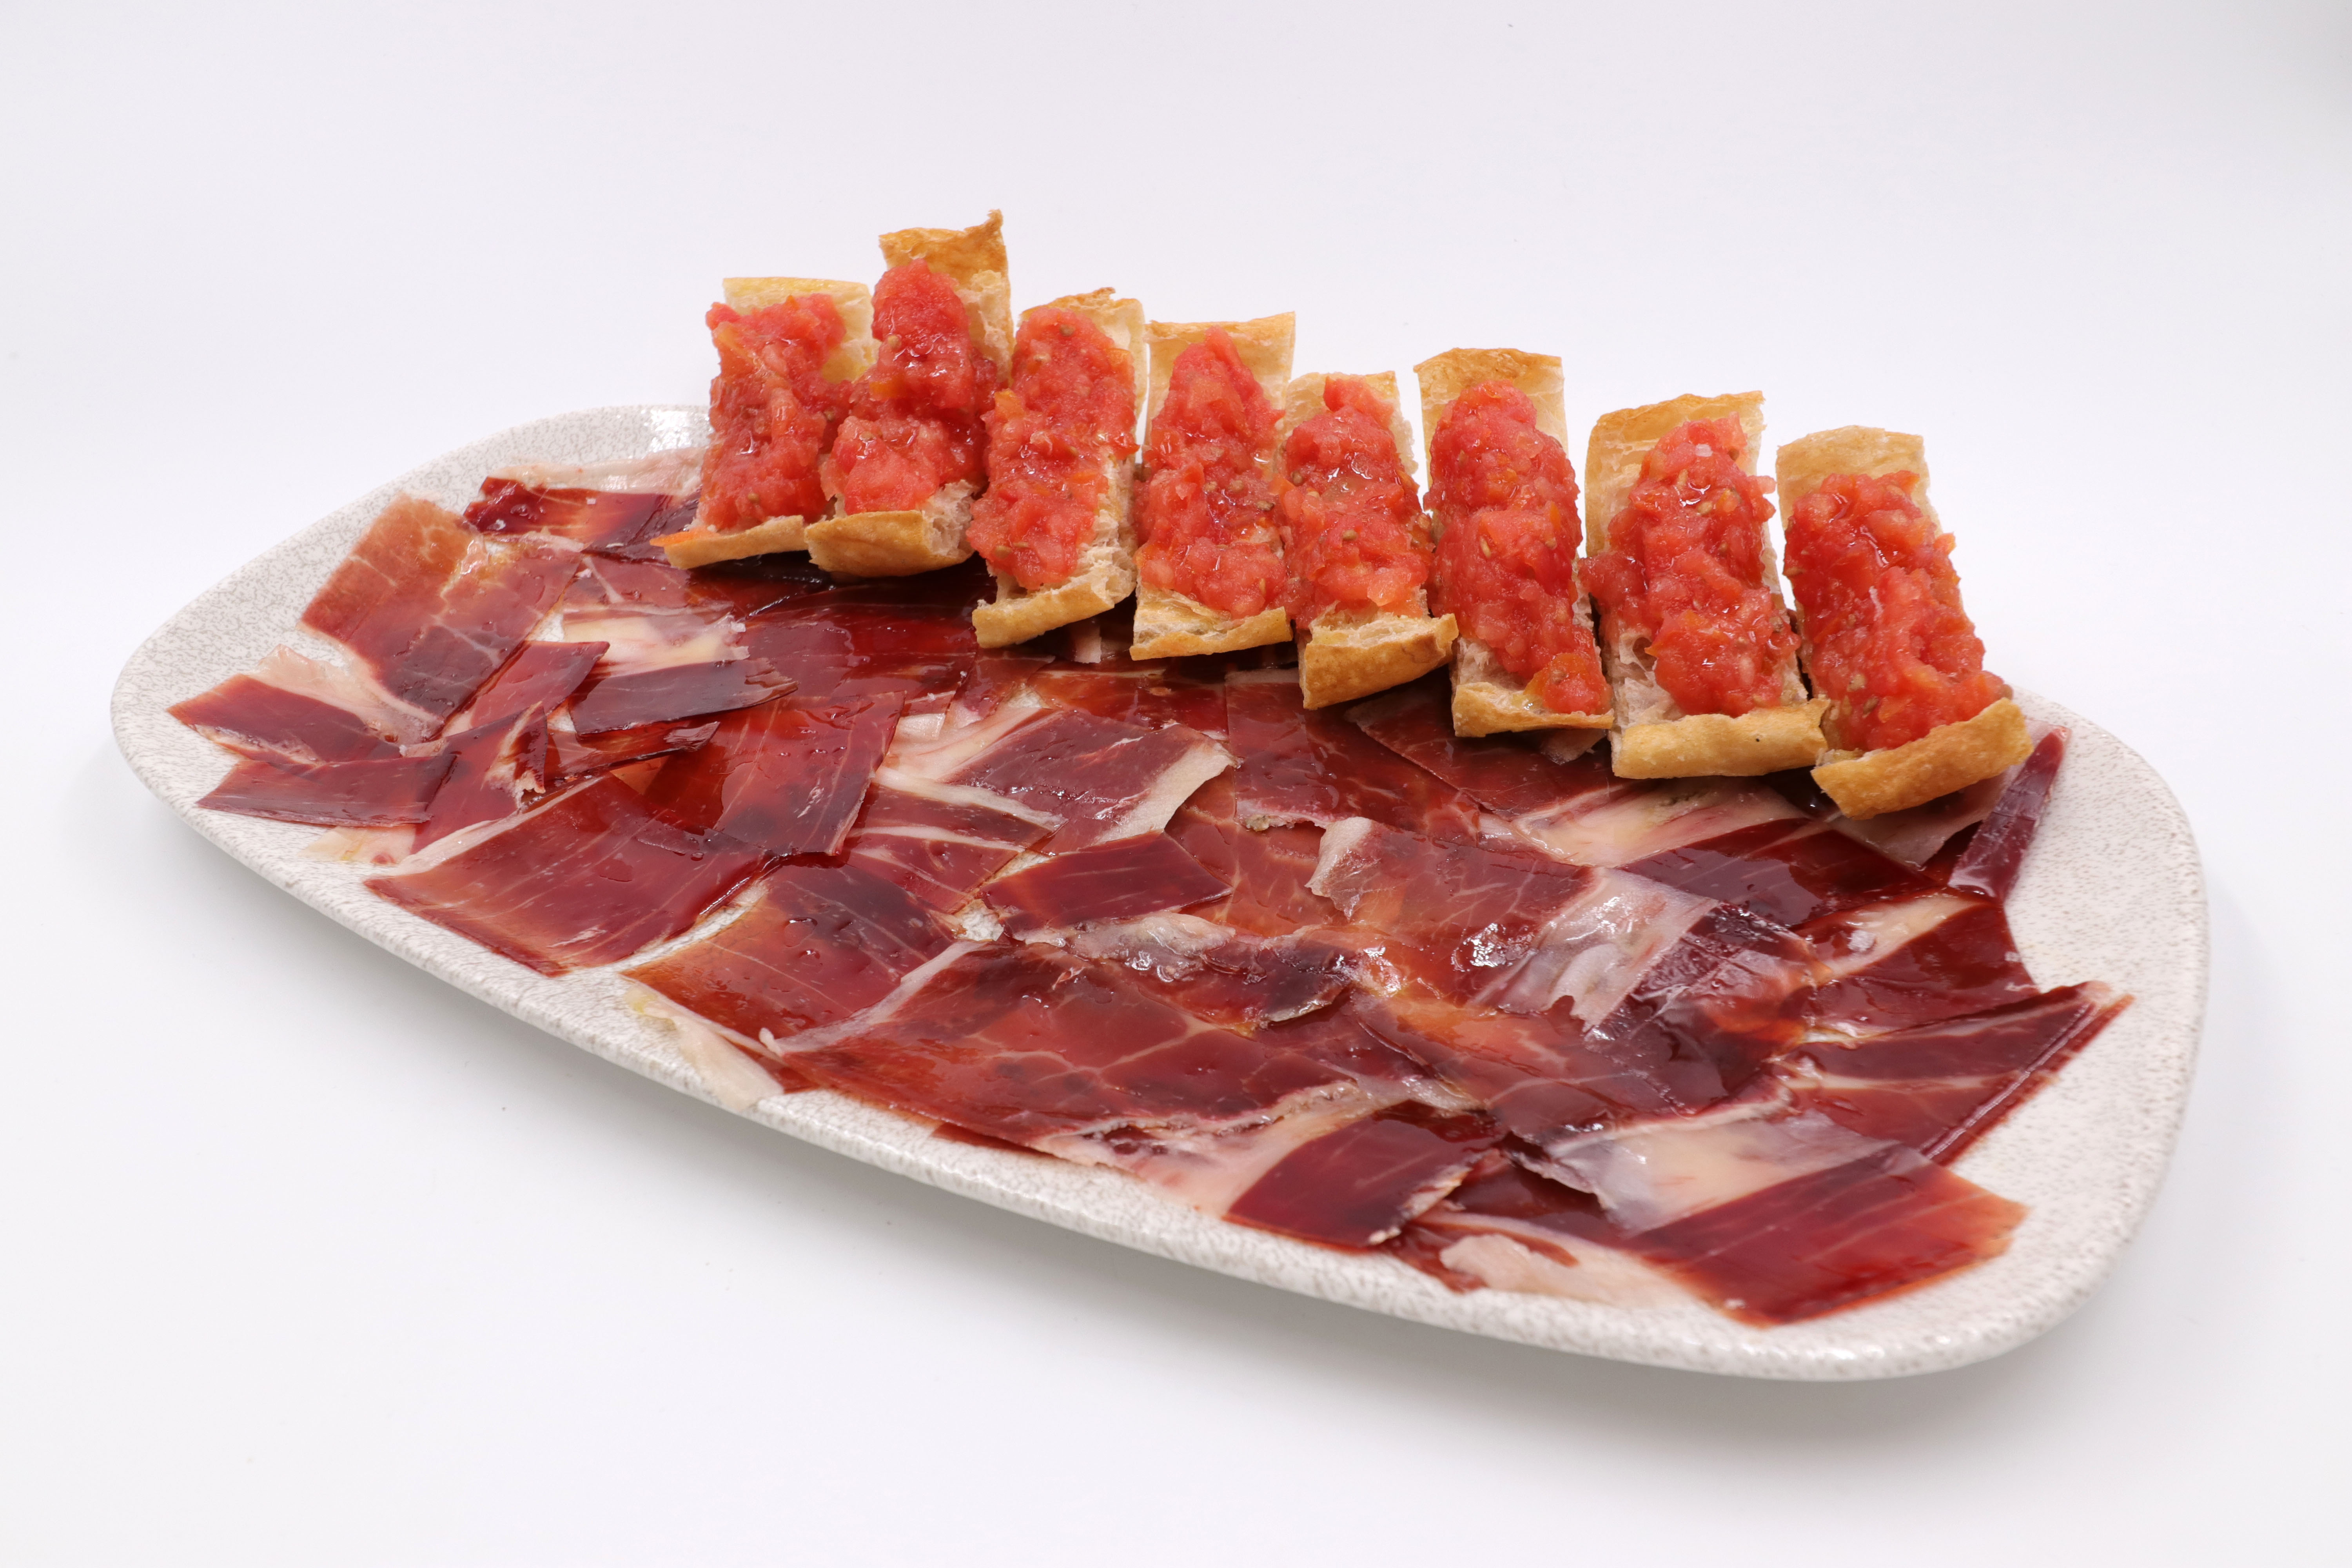 Acorn-fed Iberian ham with bread and tomato